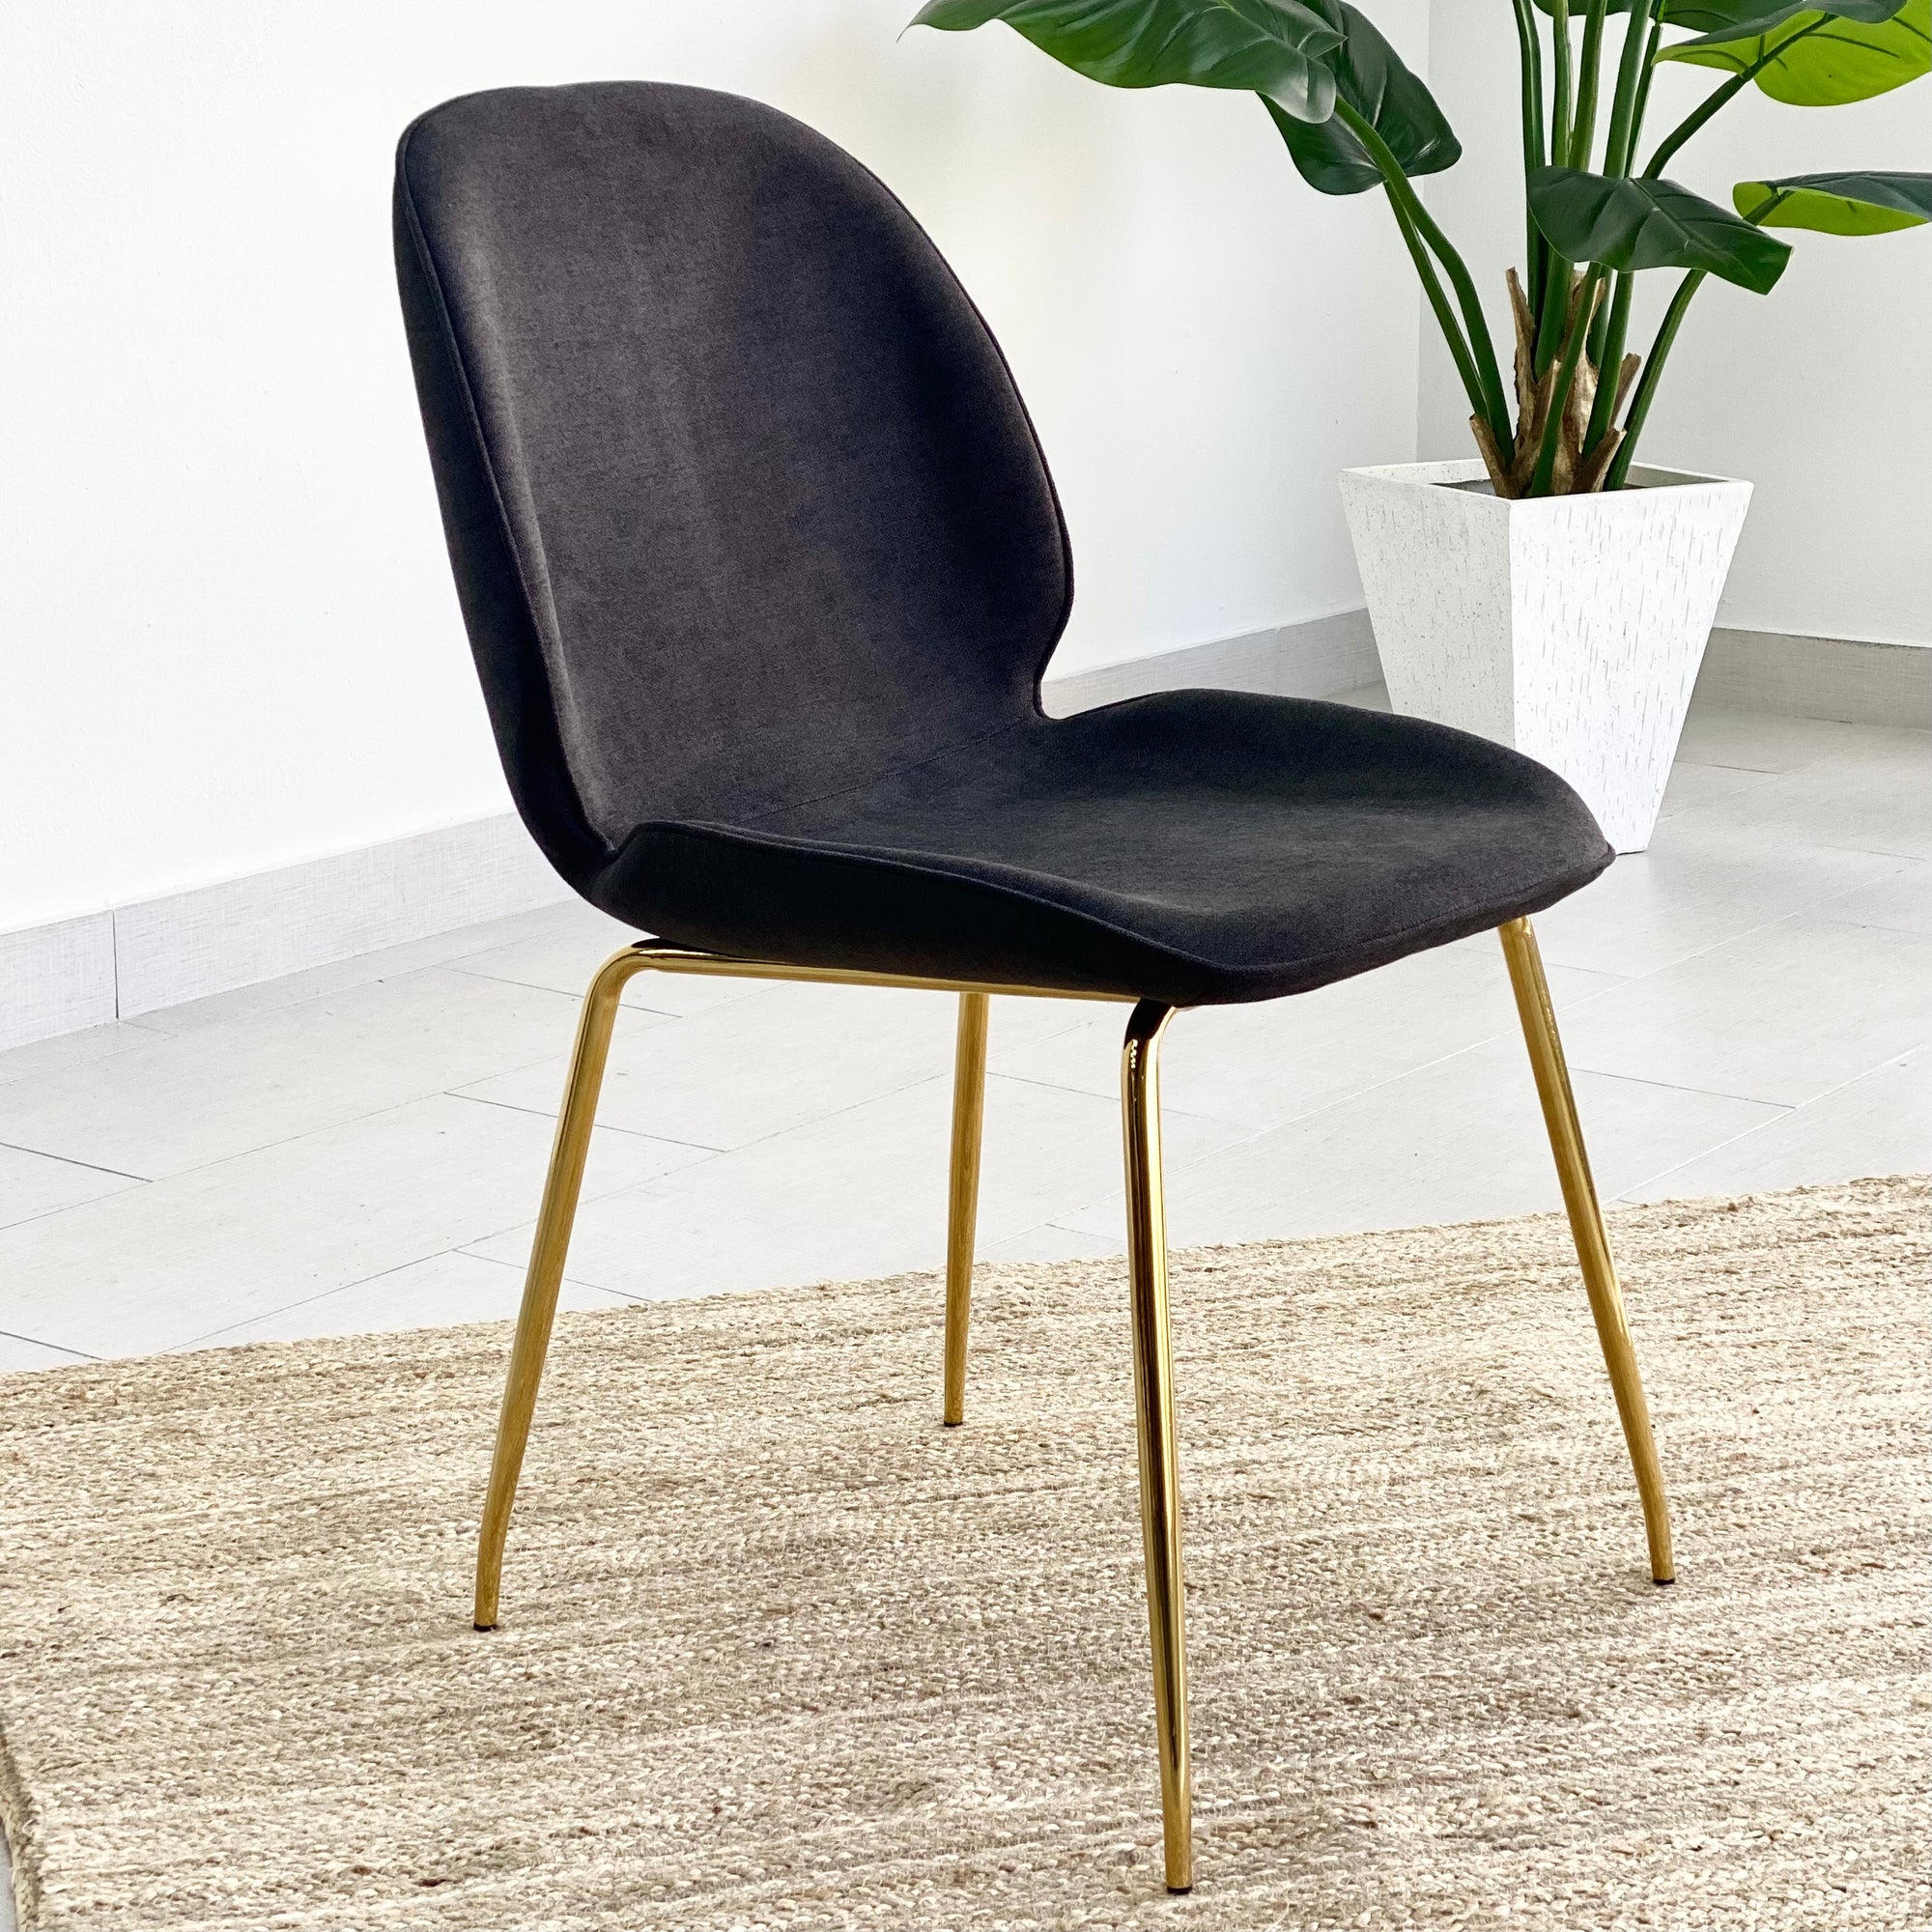 Classic Black Fabric Chair Golden Legs